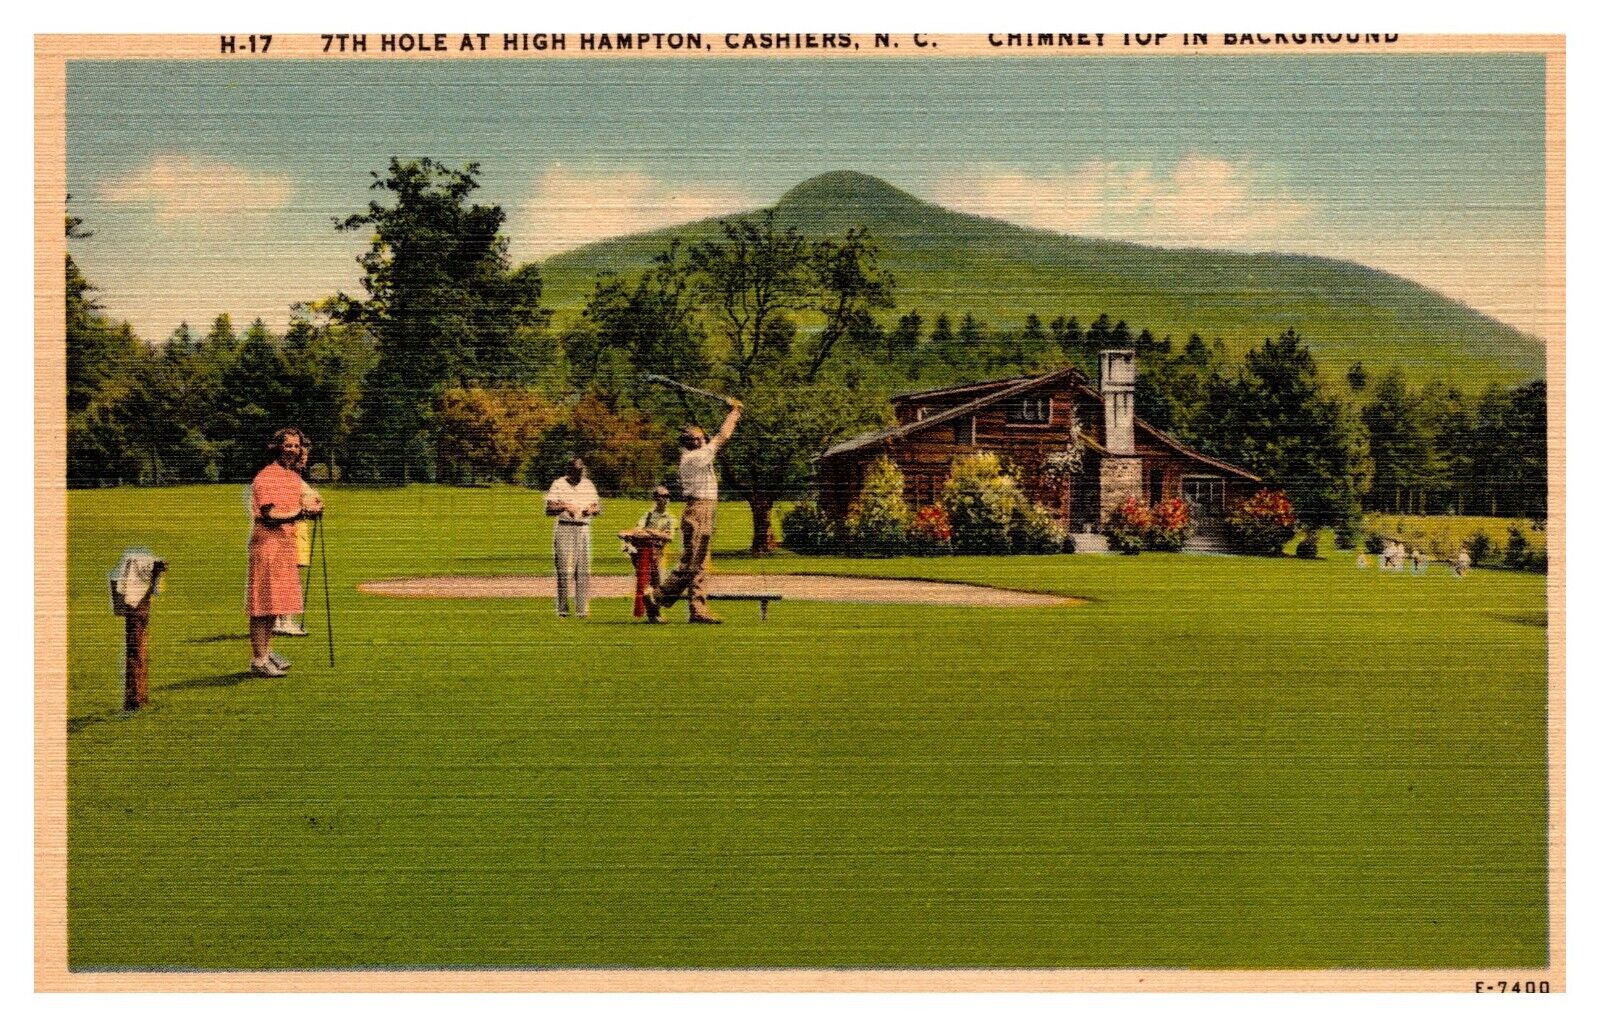 Cashiers North Carolina 7th Hole @ High Hampton Chimney Top View Linen Postcard